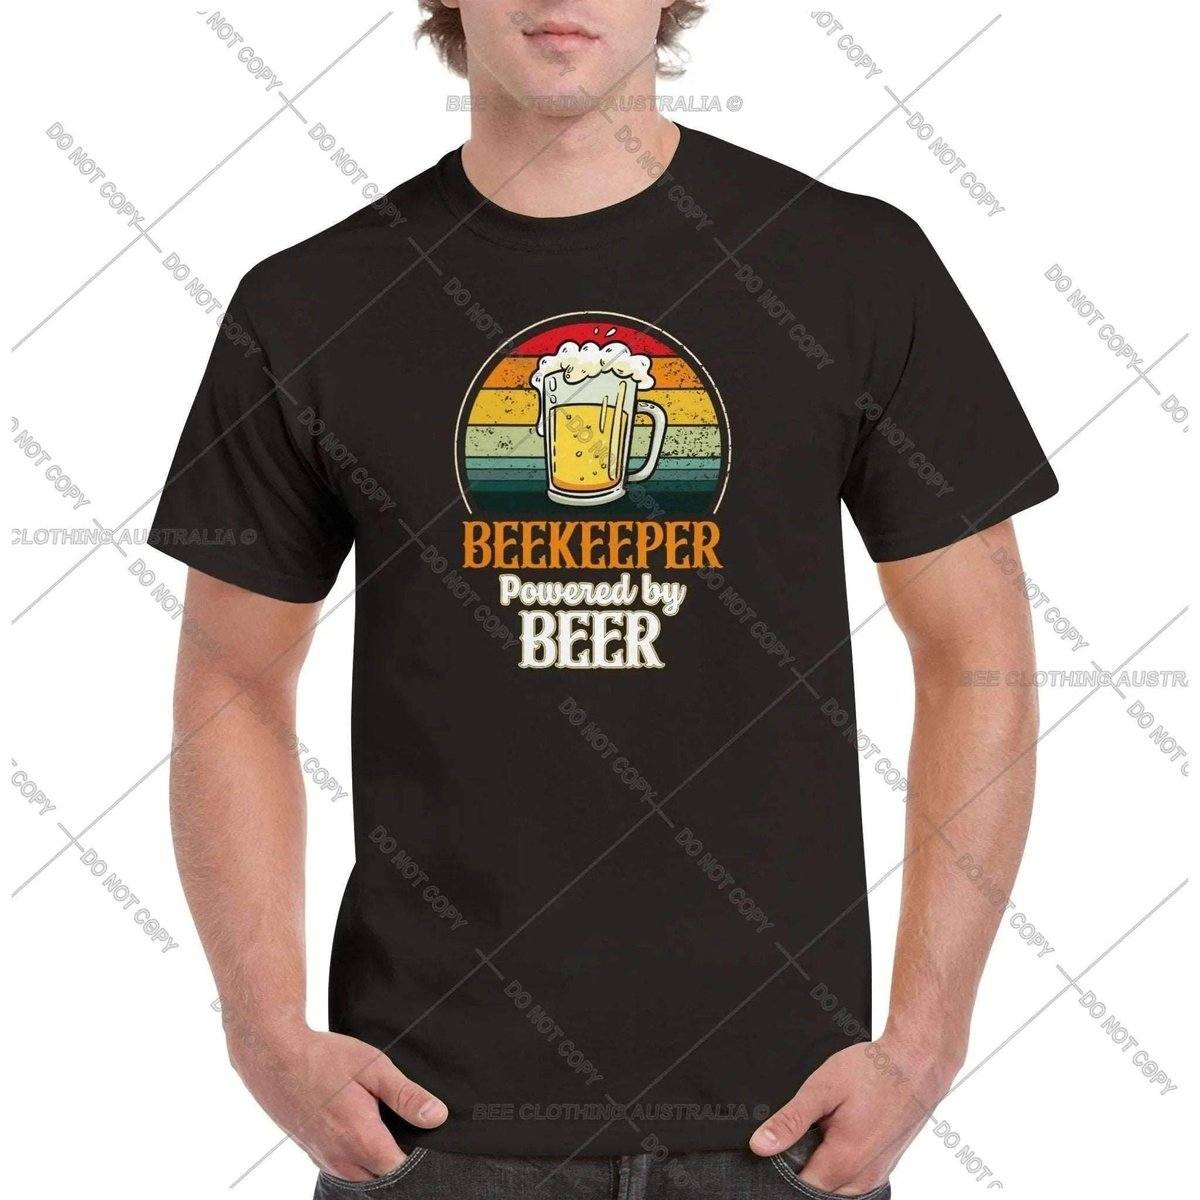 Beekeeper - Powered By Beer Tshirt - Retro Vintage Bee - Unisex Crewneck T-shirt Australia Online Color